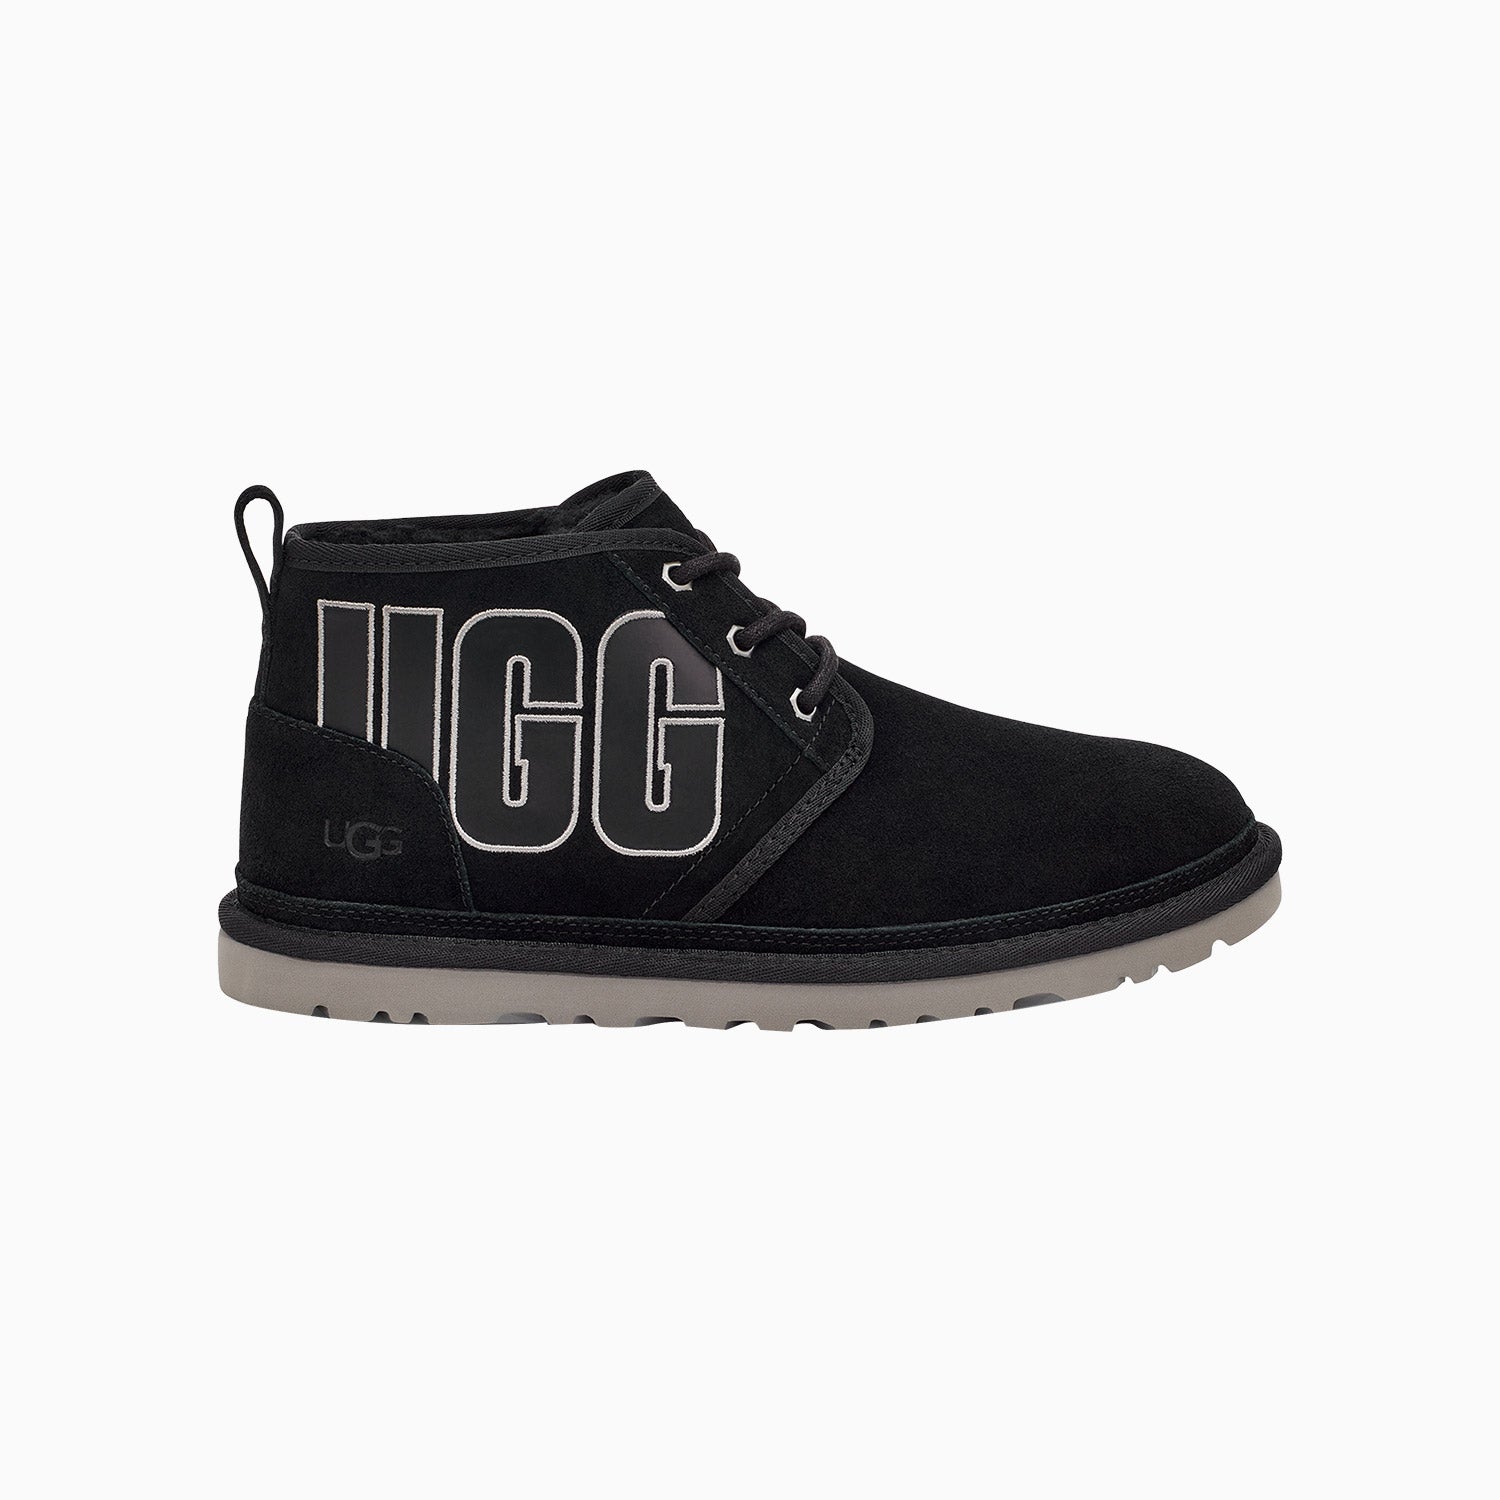 UGG Men's Neumel Graphic Outline Boot - Color: Black Grey Suede - Tops and Bottoms USA -